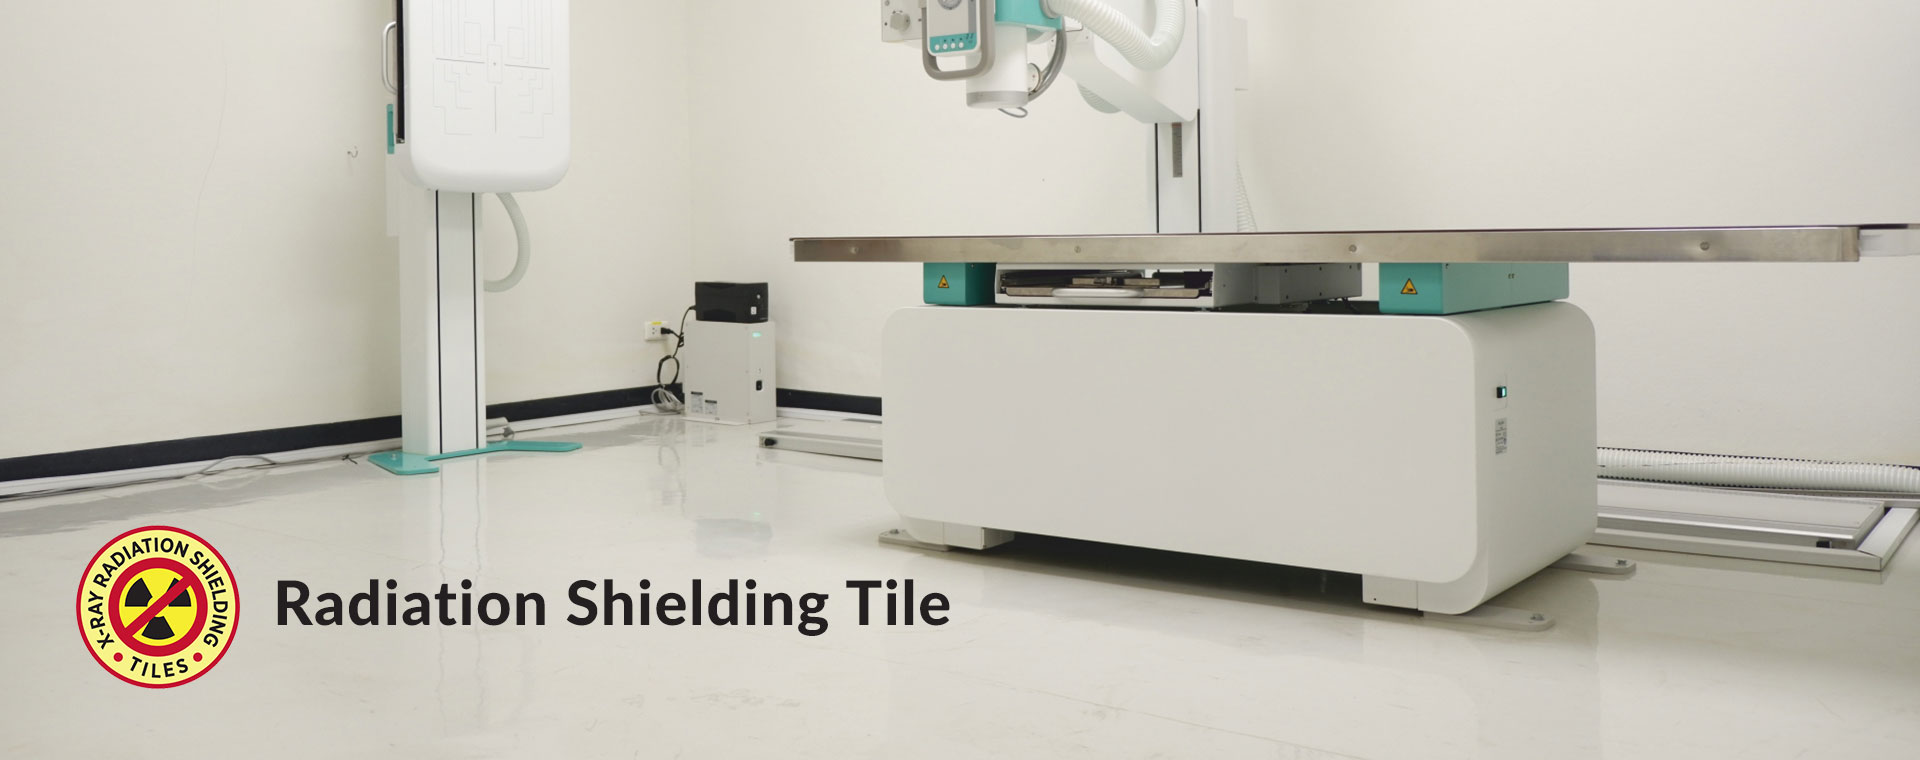 Radiation Shielding Tiles